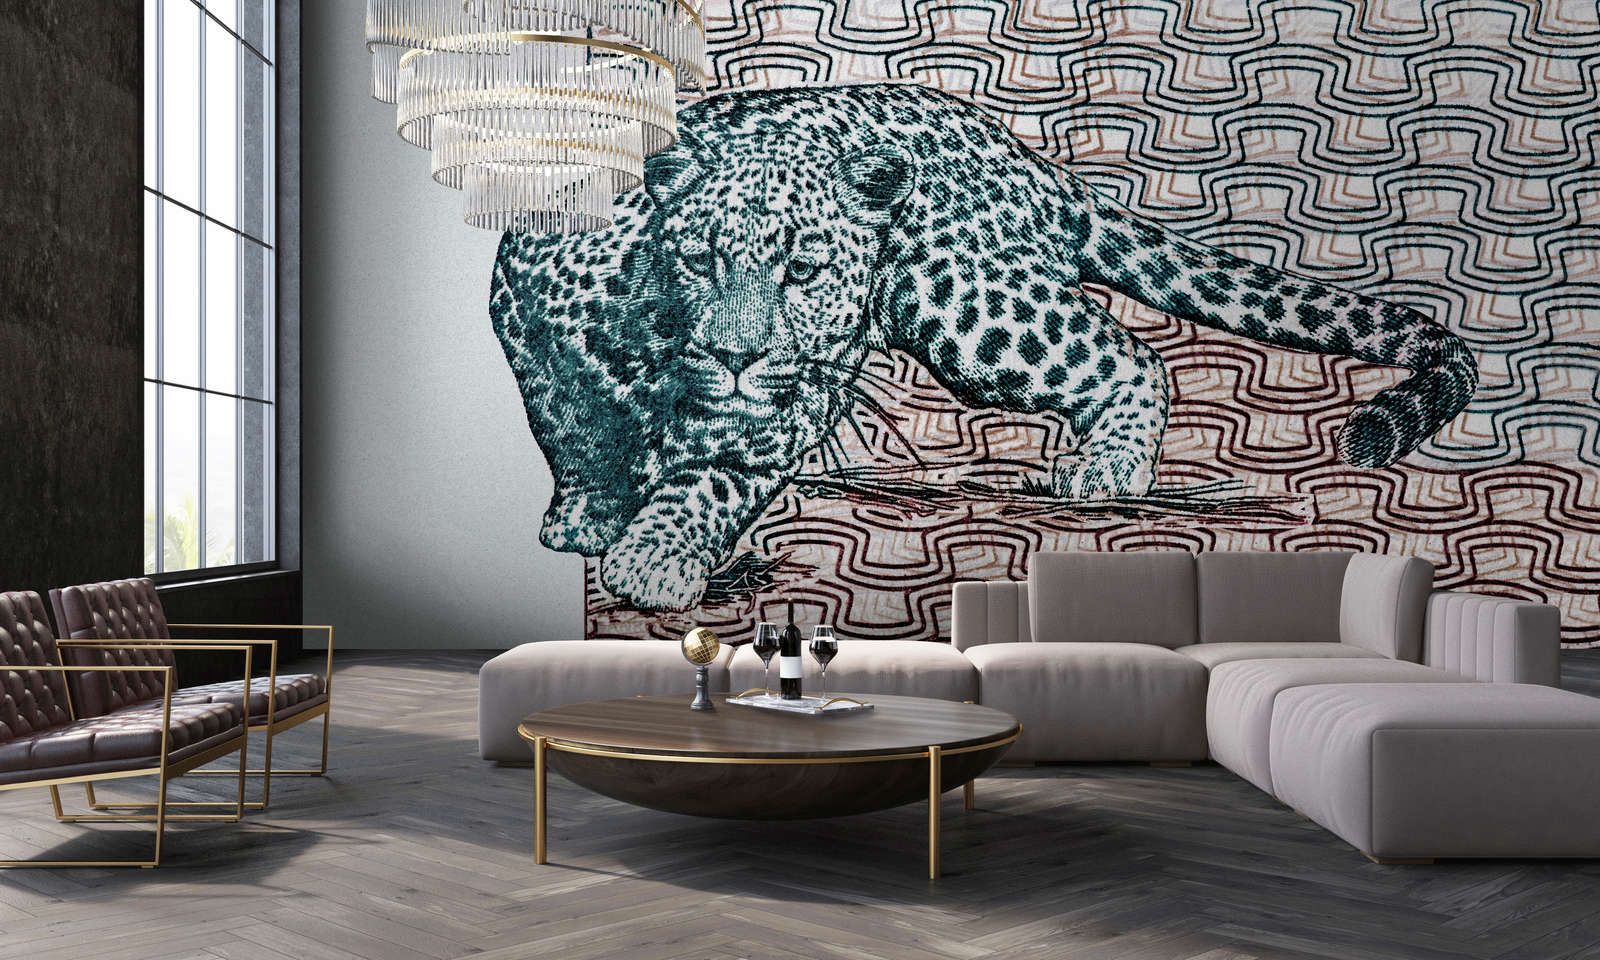             Digital behang »yugana« - luipaard voor abstract patroon - Kraftpapiertextuur | mat, glad vliesmateriaal
        